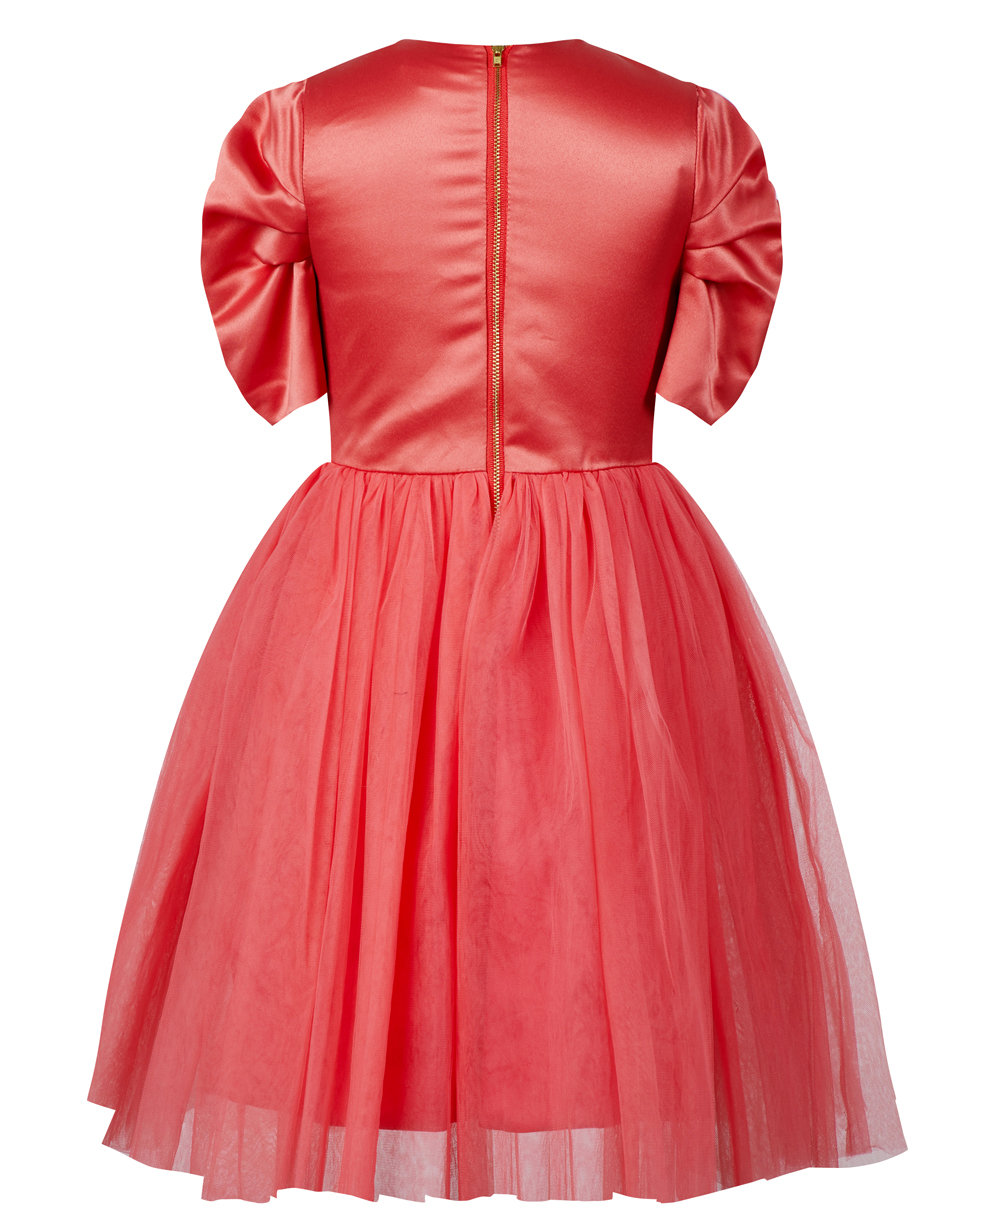 Red Princess Tuelle Dress